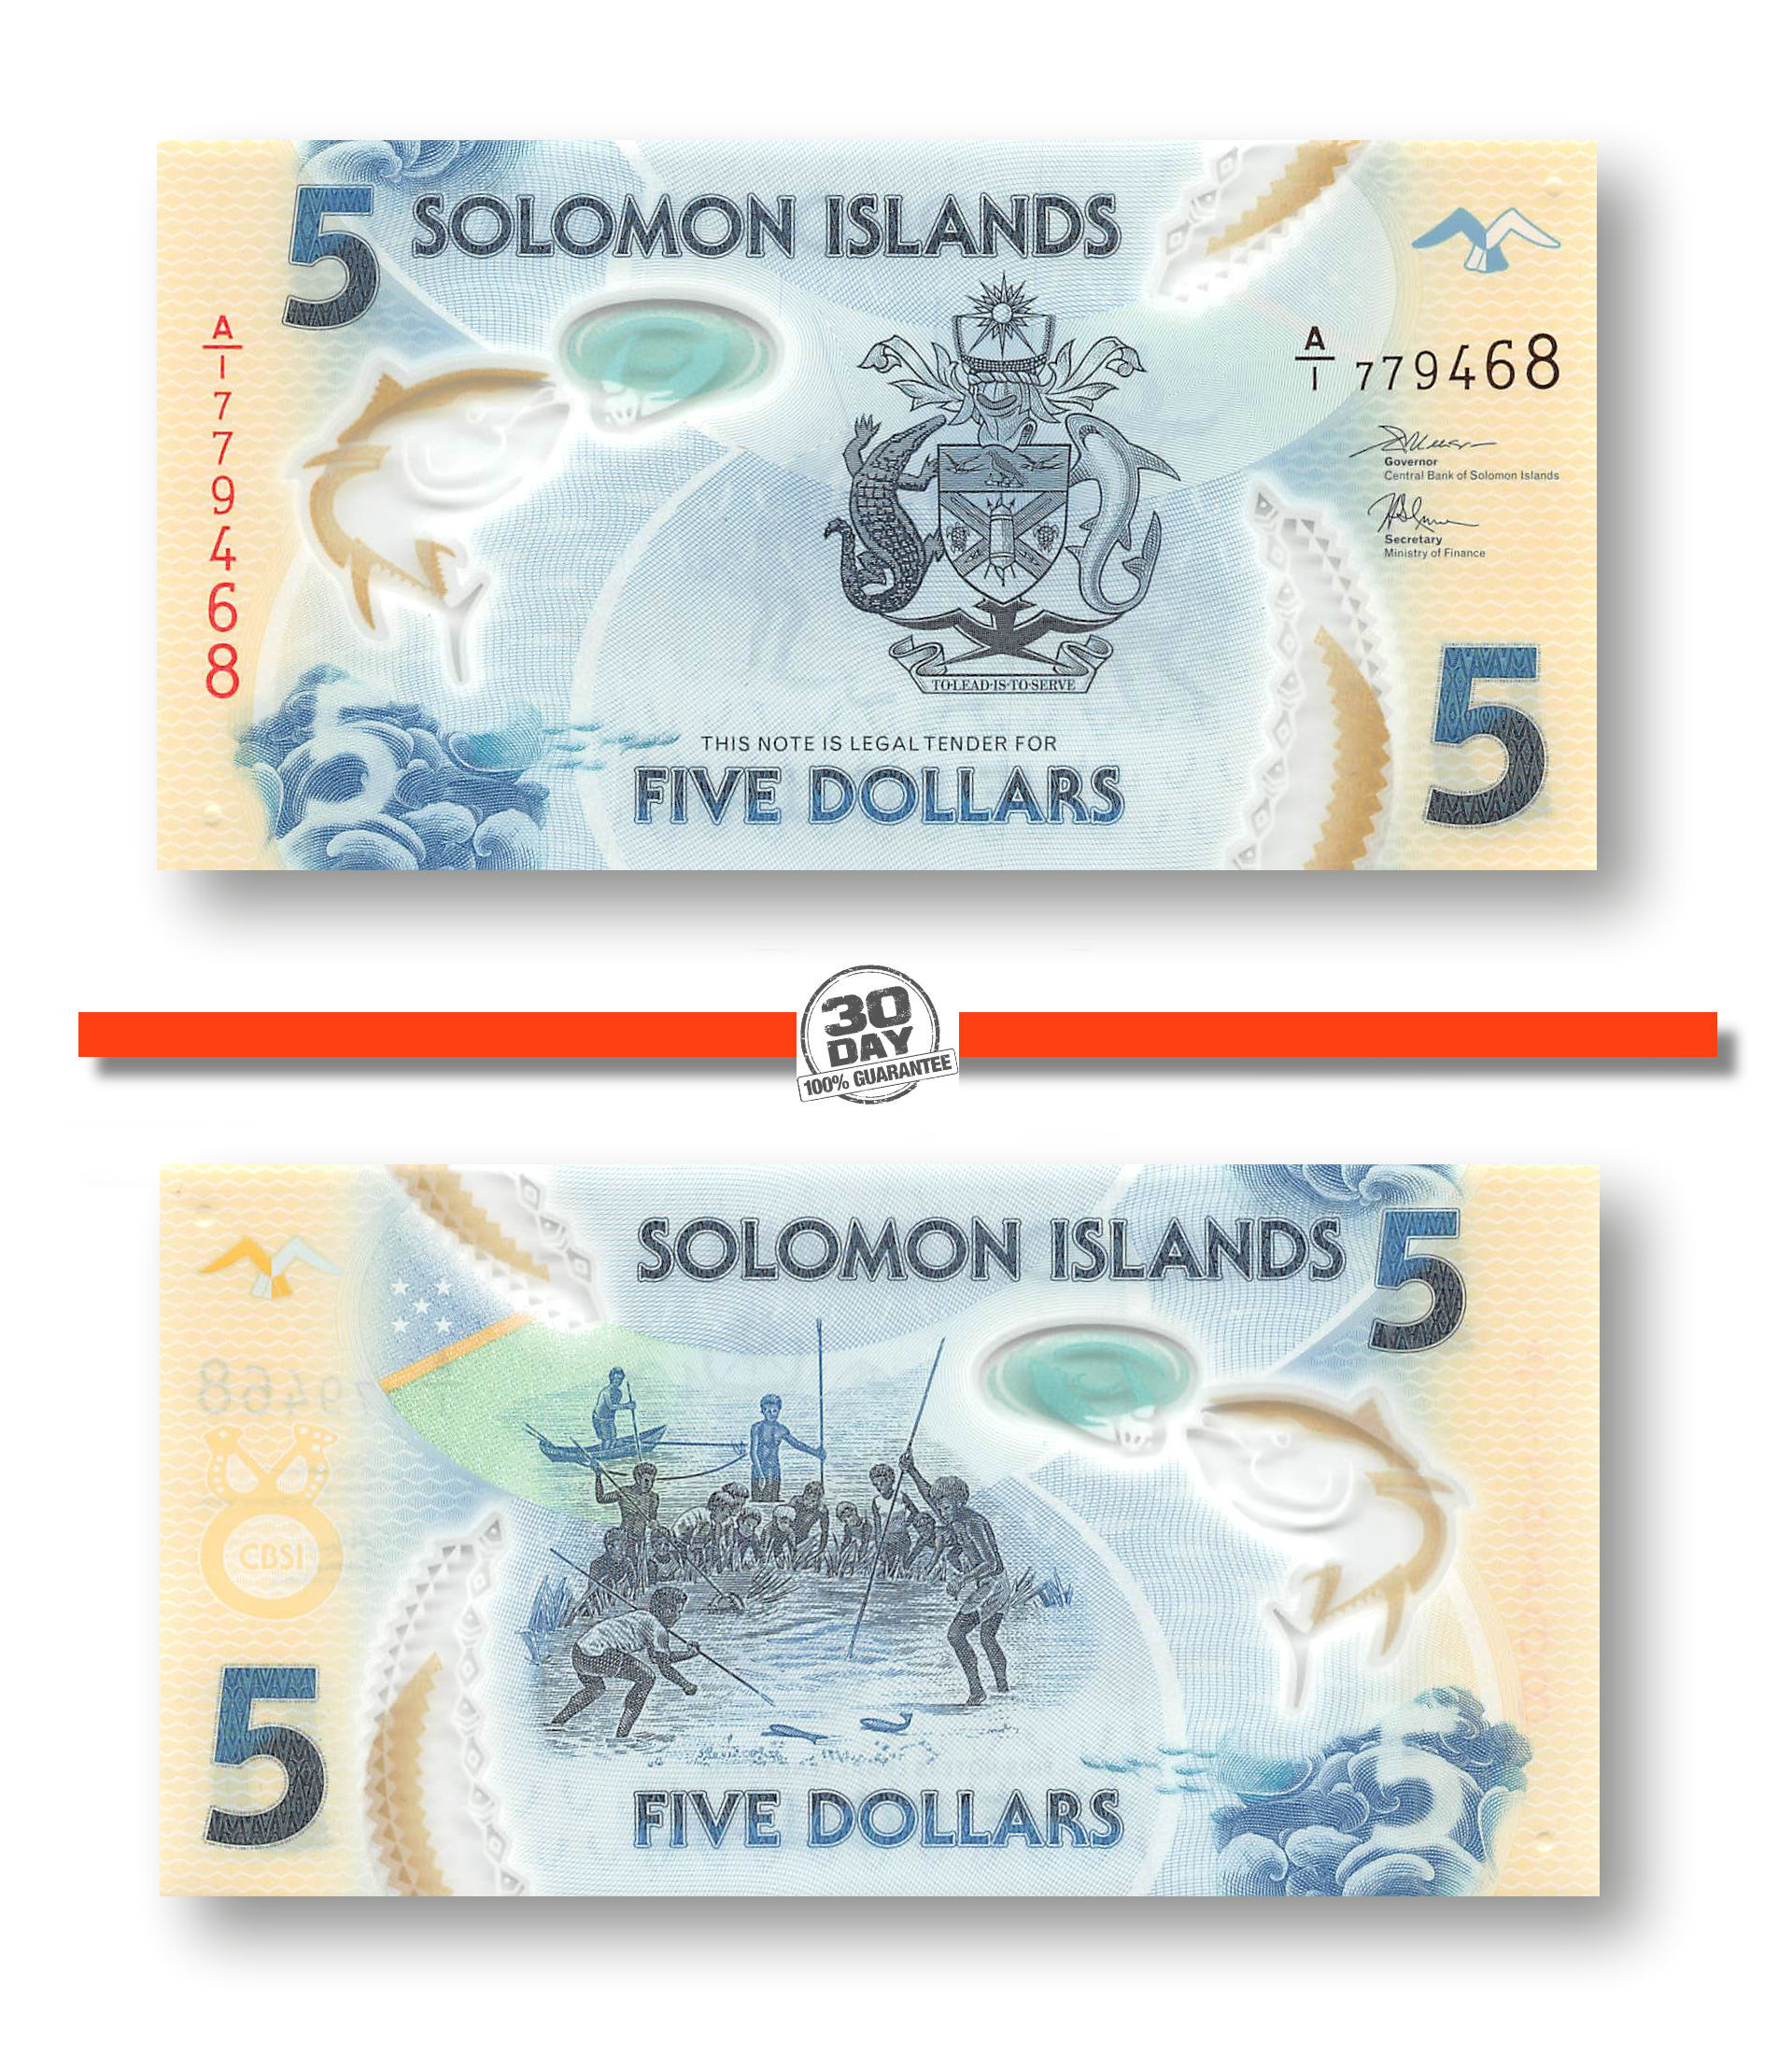 Solomon Islands 5 Dollars 2019 P-New Prefix A/1 Specimen Fish Polymer Unc 